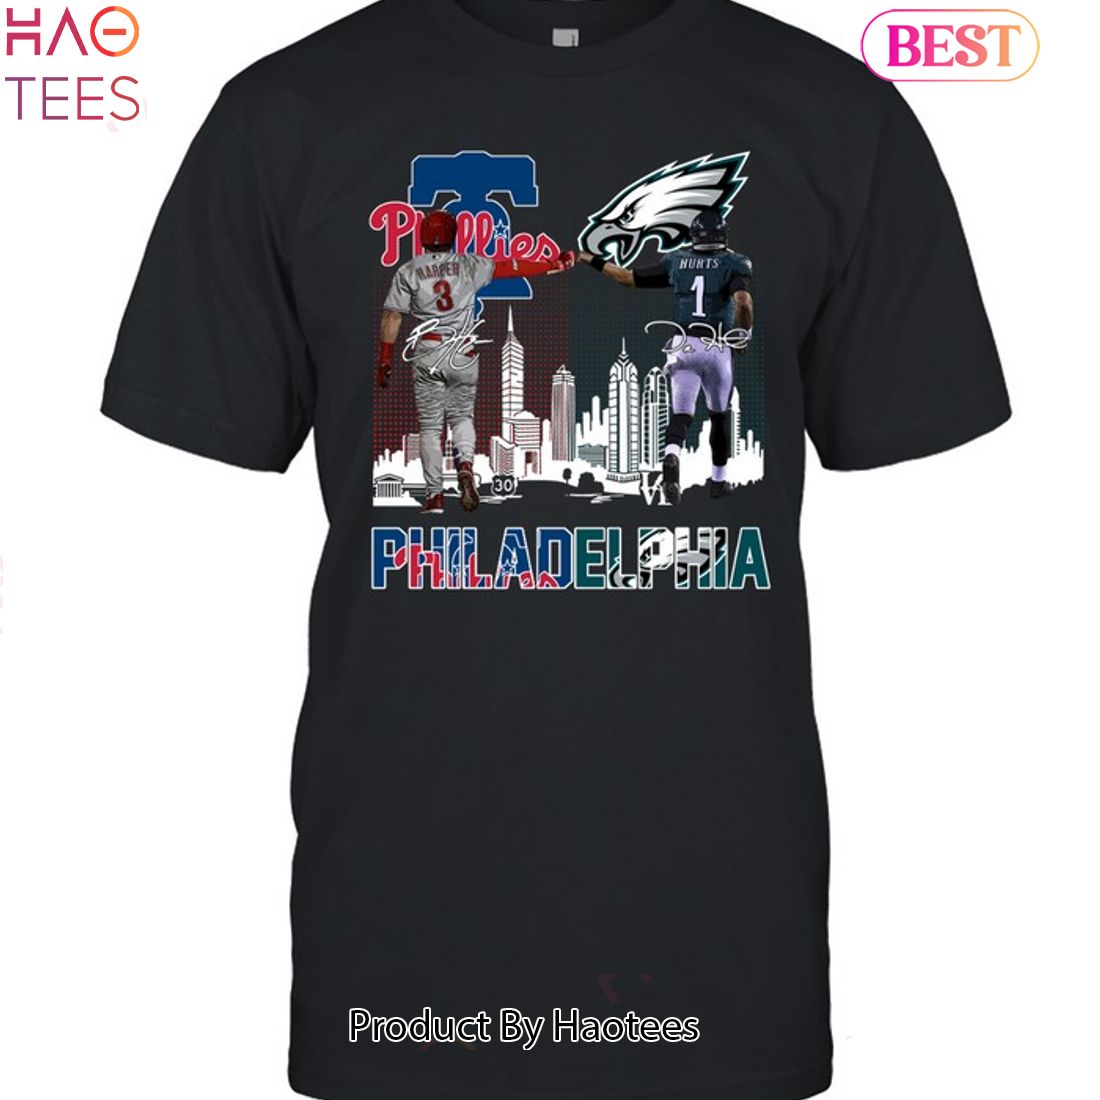 HOT FASHION Philadelphia Phillies And Philadelphia Eagles Champion Unisex T- Shirt